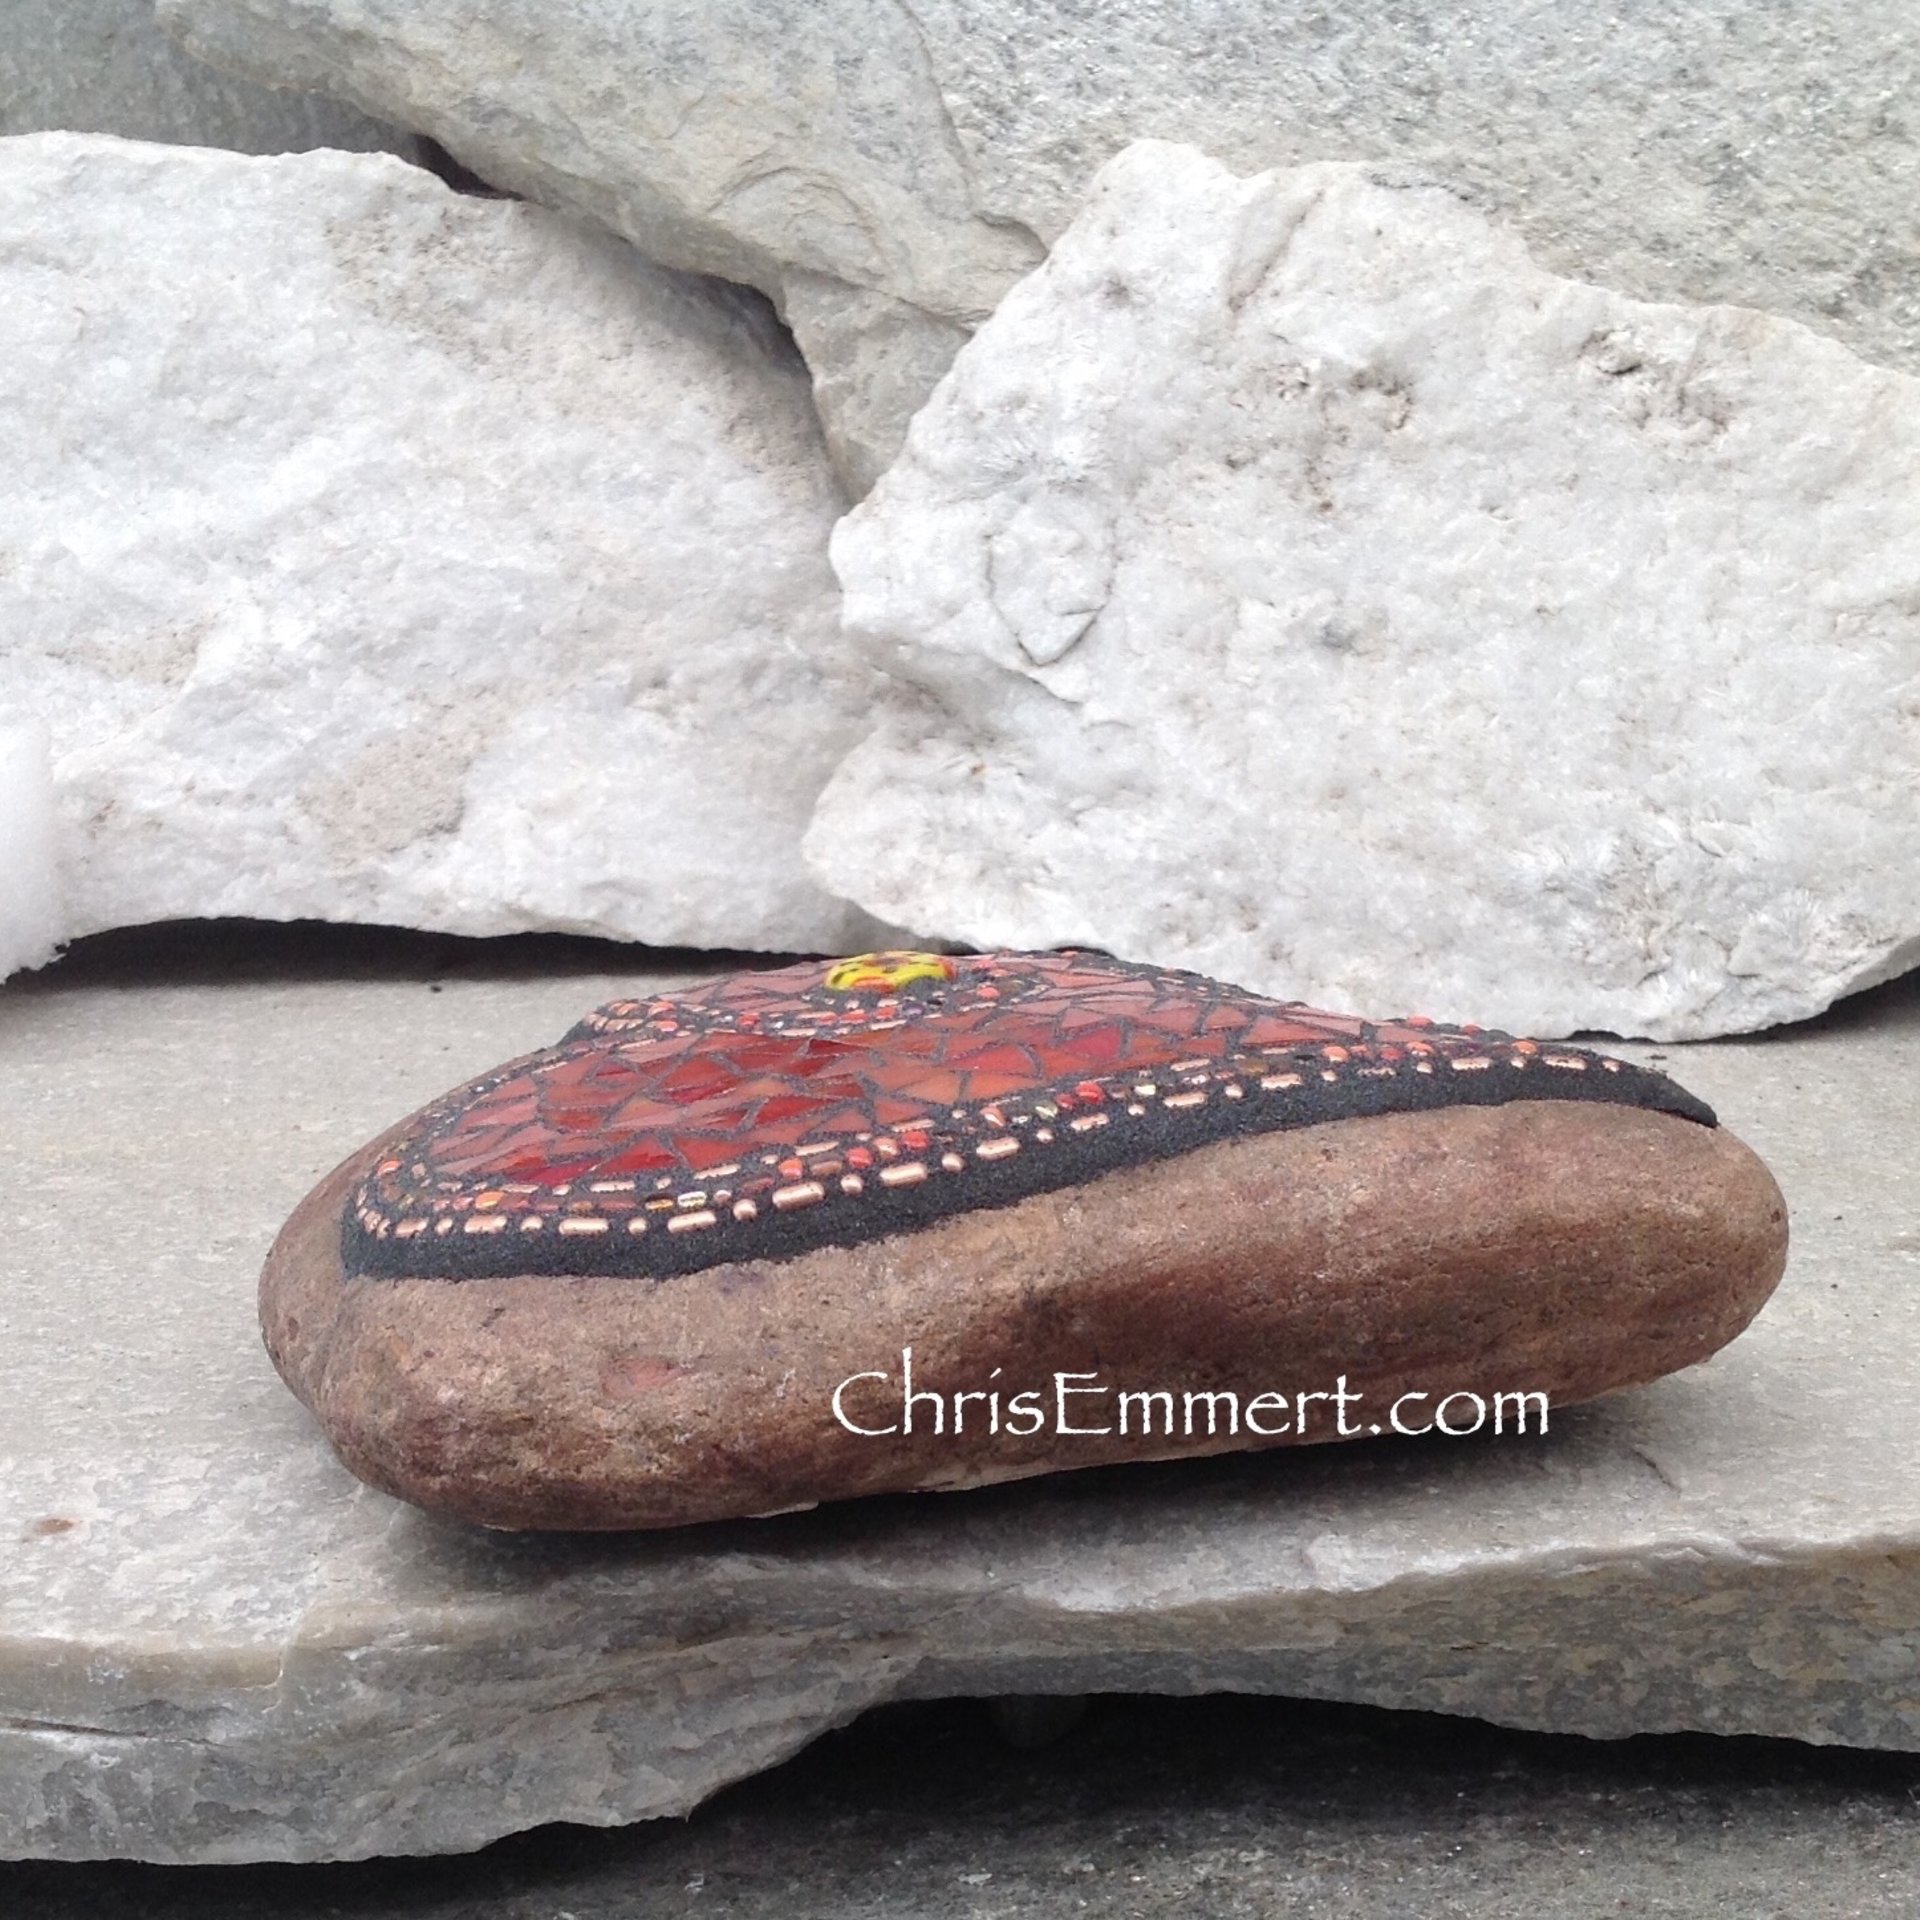 Red/Orange Mosaic Rock, Gardener Gift, Home Decor, Mosaic Garden Stone